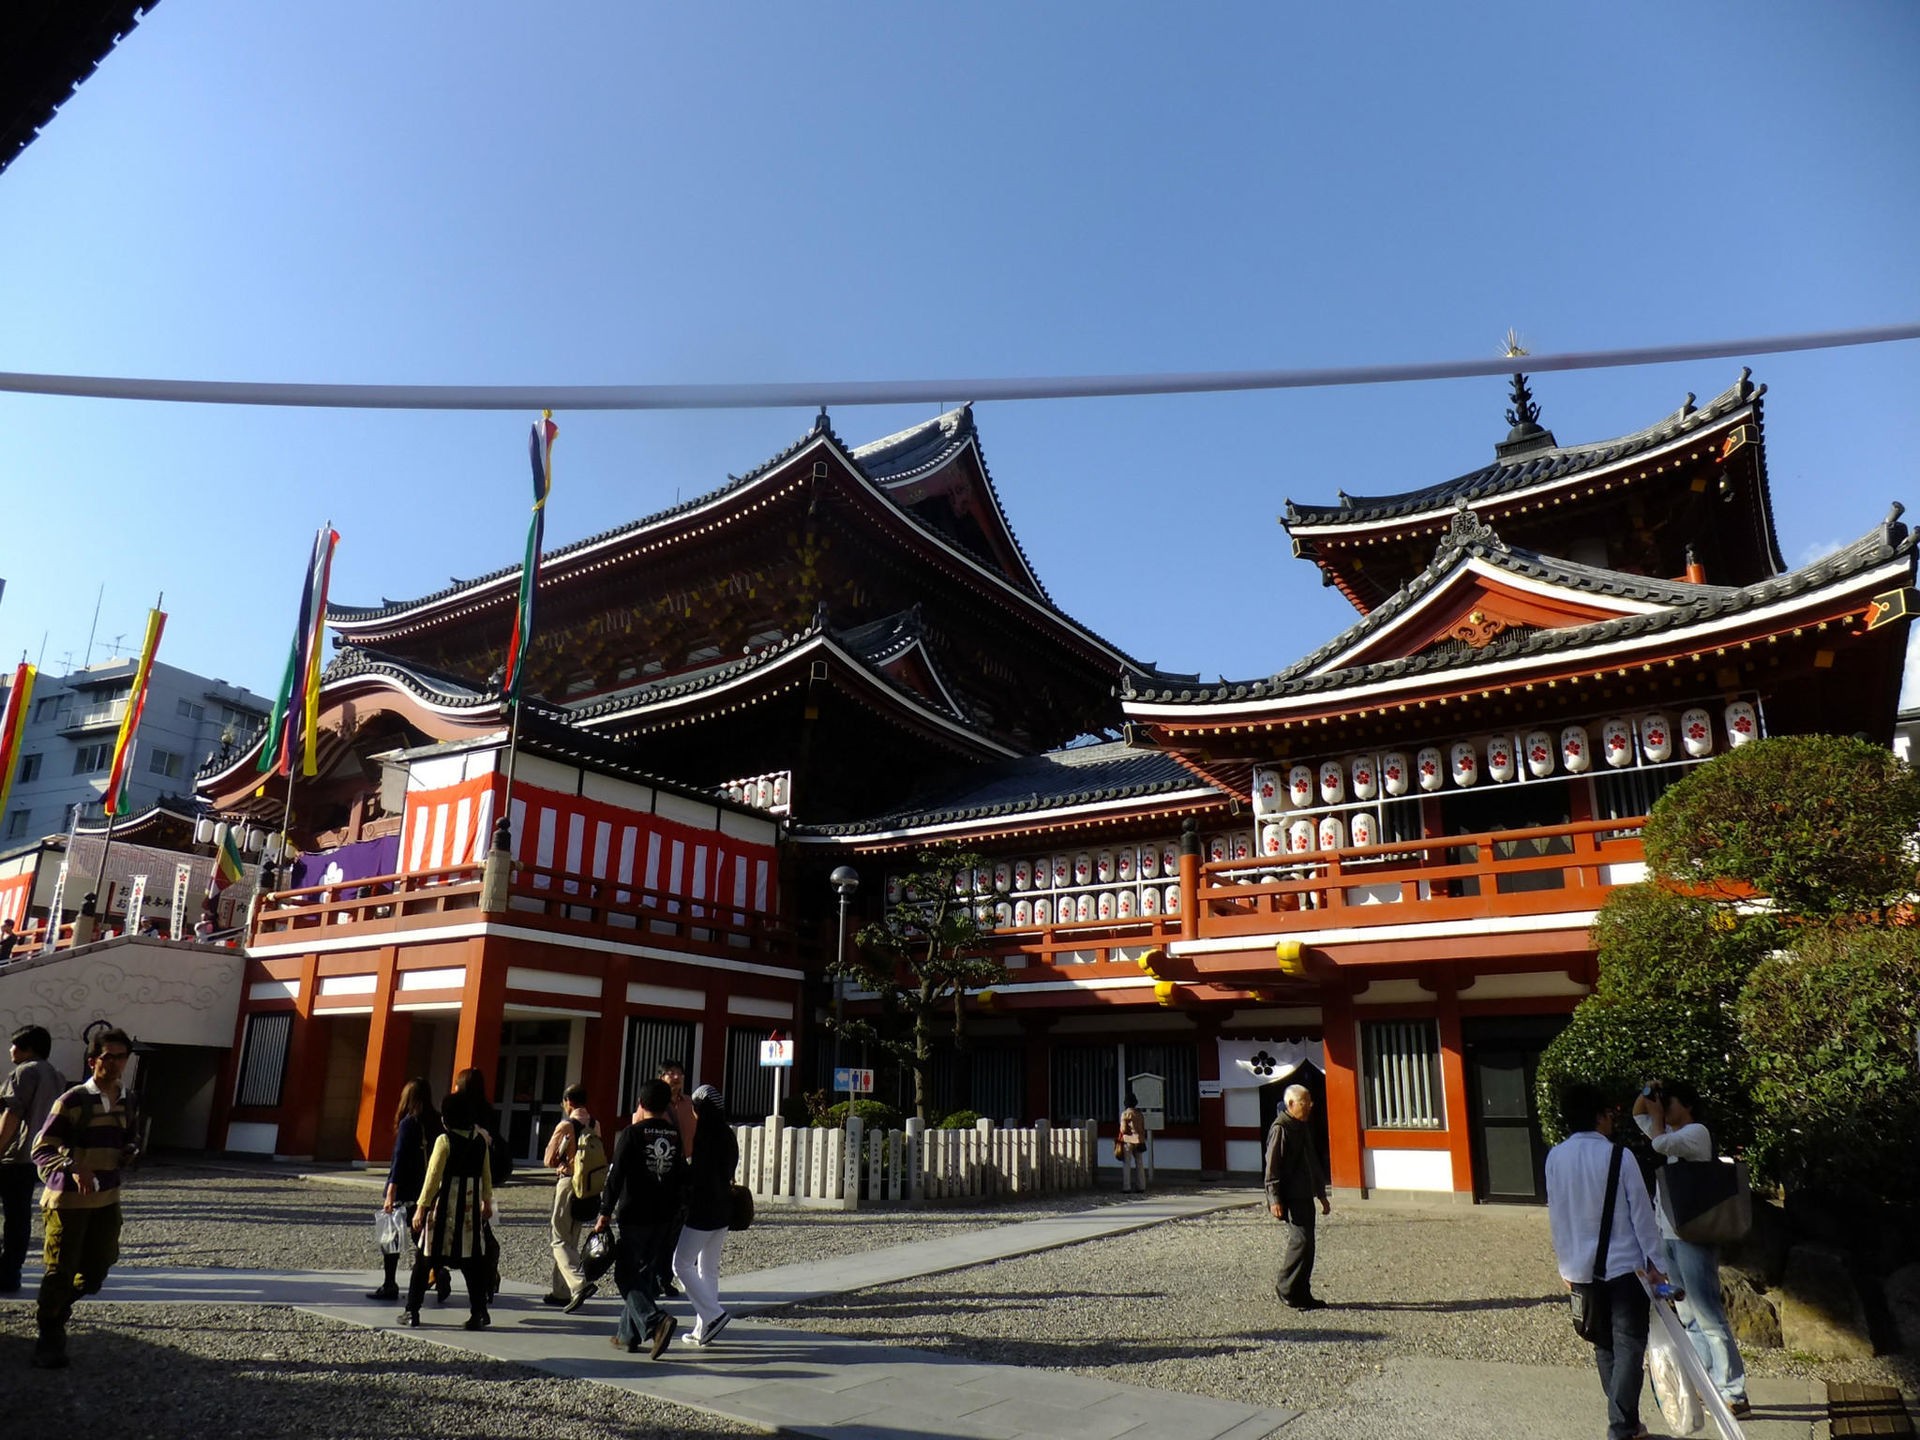 大须观音寺(osu kannon temple)